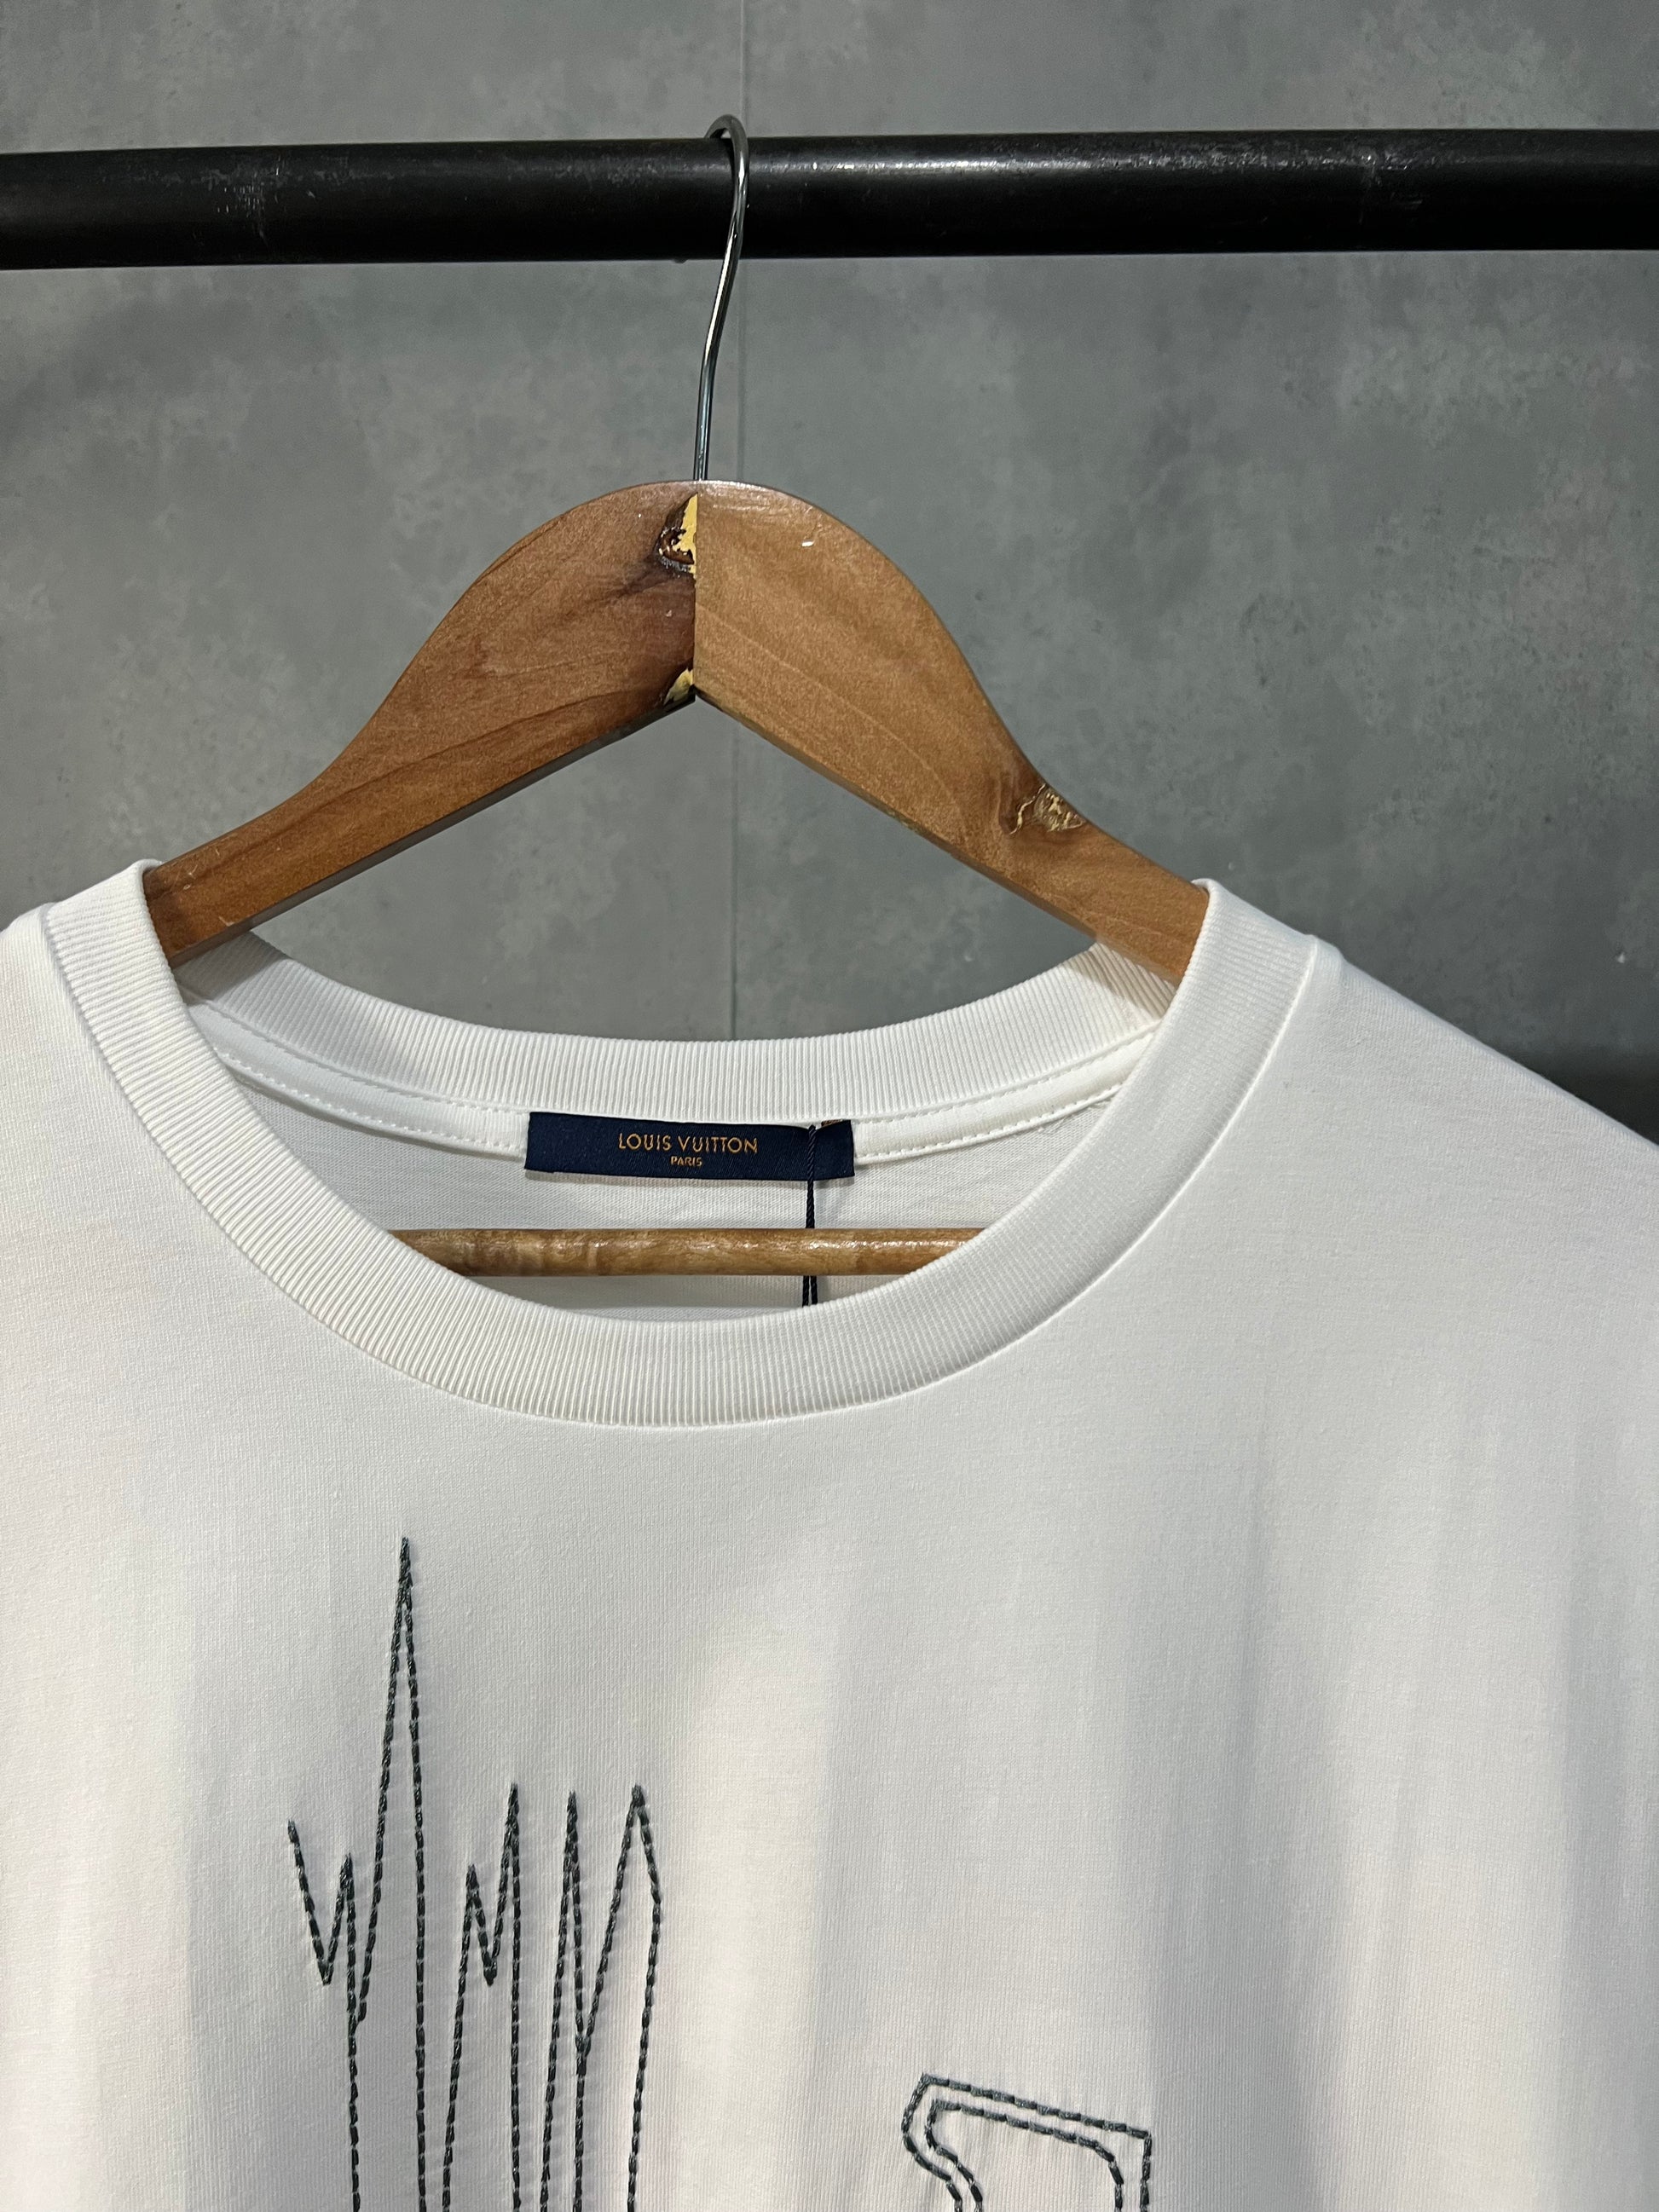 Louis Vuitton Black 'LV Frequency' T-Shirt